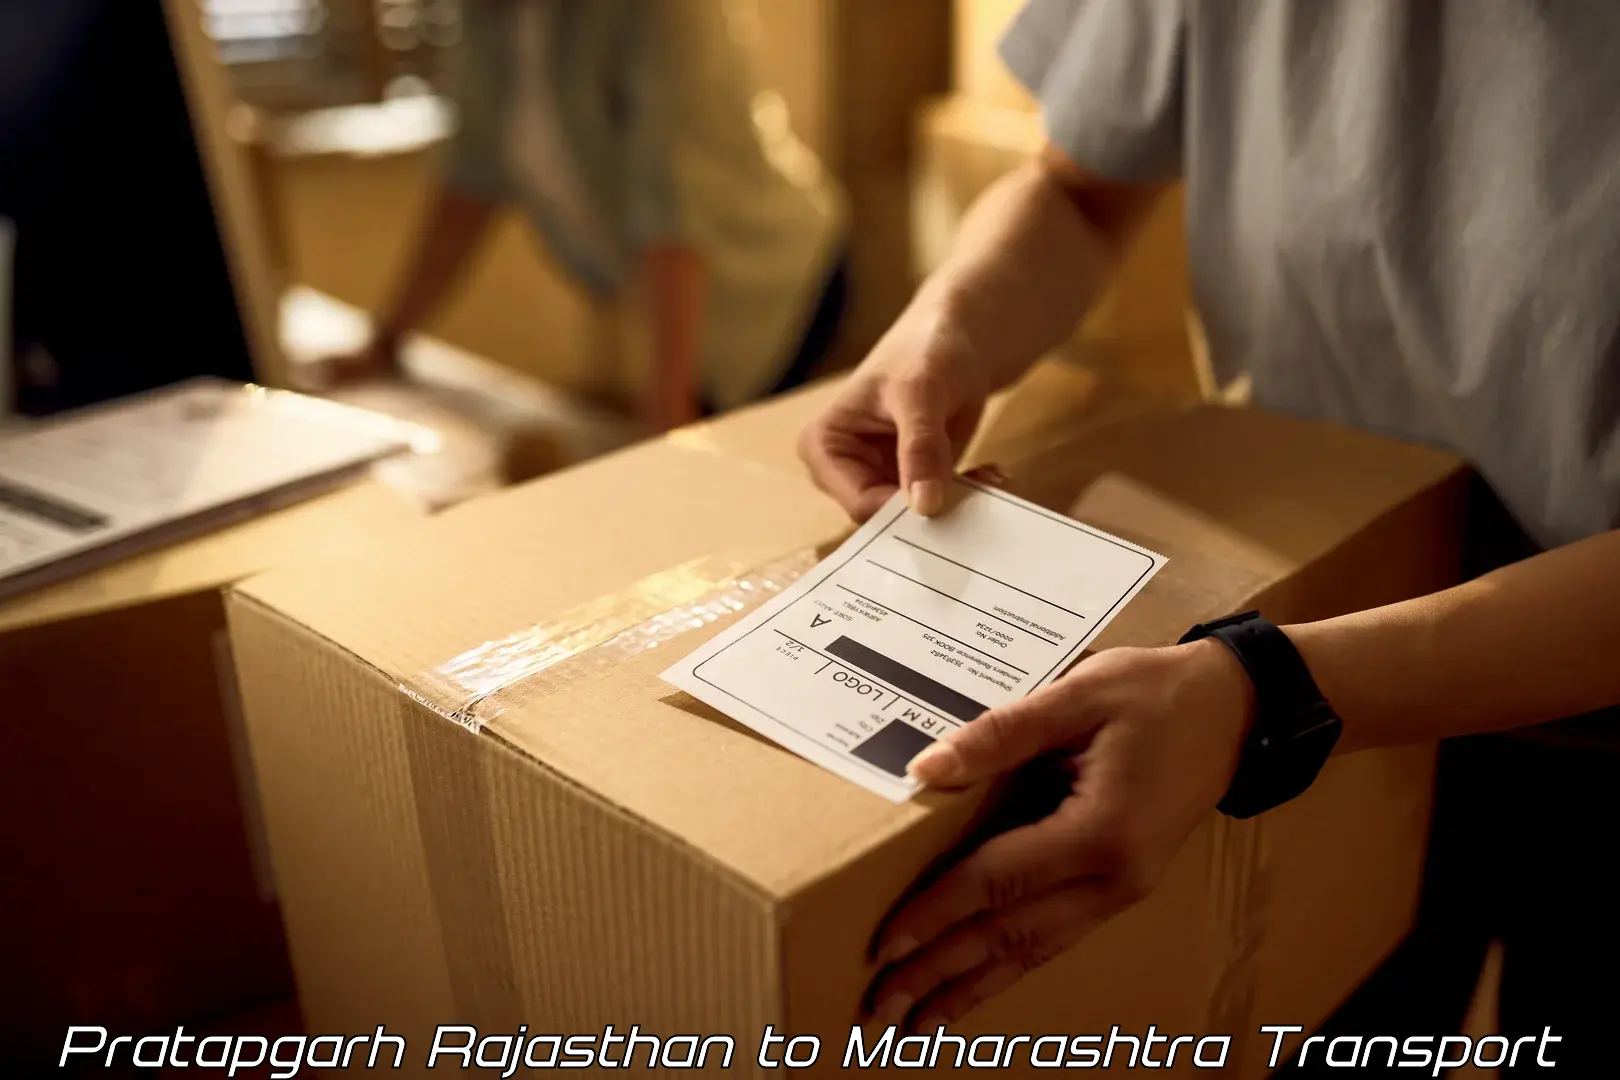 Goods delivery service Pratapgarh Rajasthan to Lakhandur